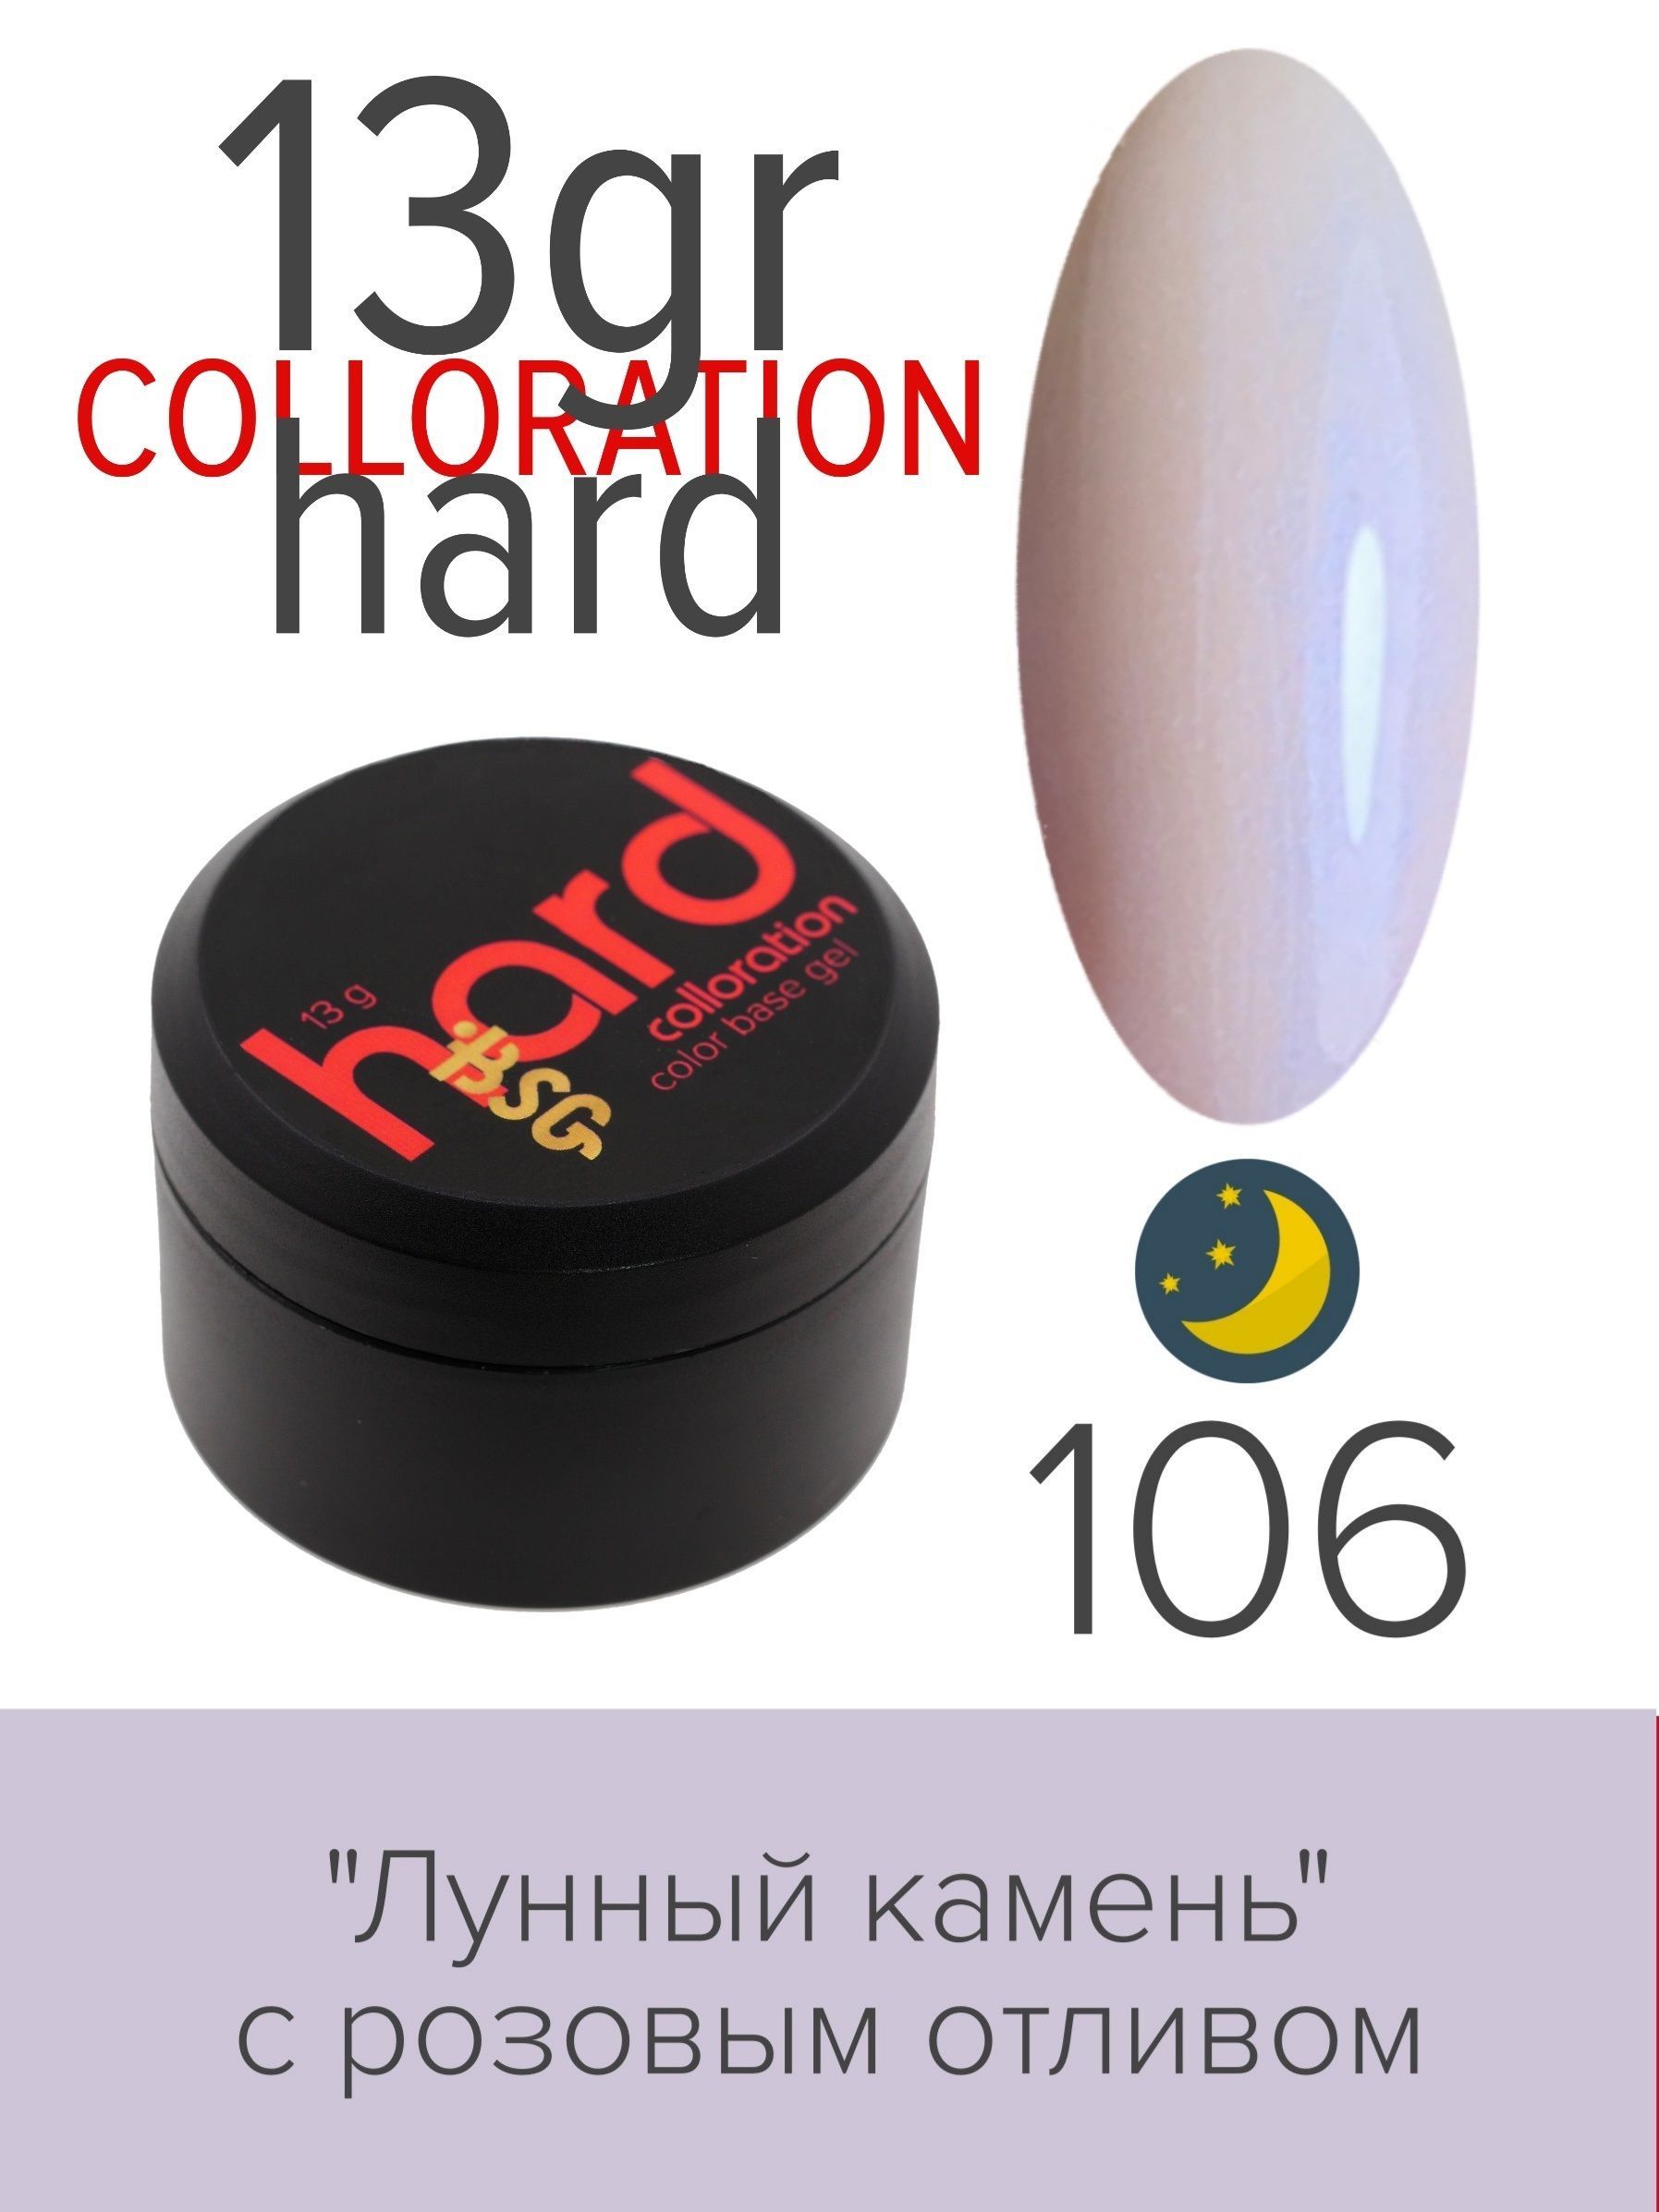 База BSG Colloration Hard цветная жесткая №106 комплект ных жестких баз bsg colloration hard лунный камень